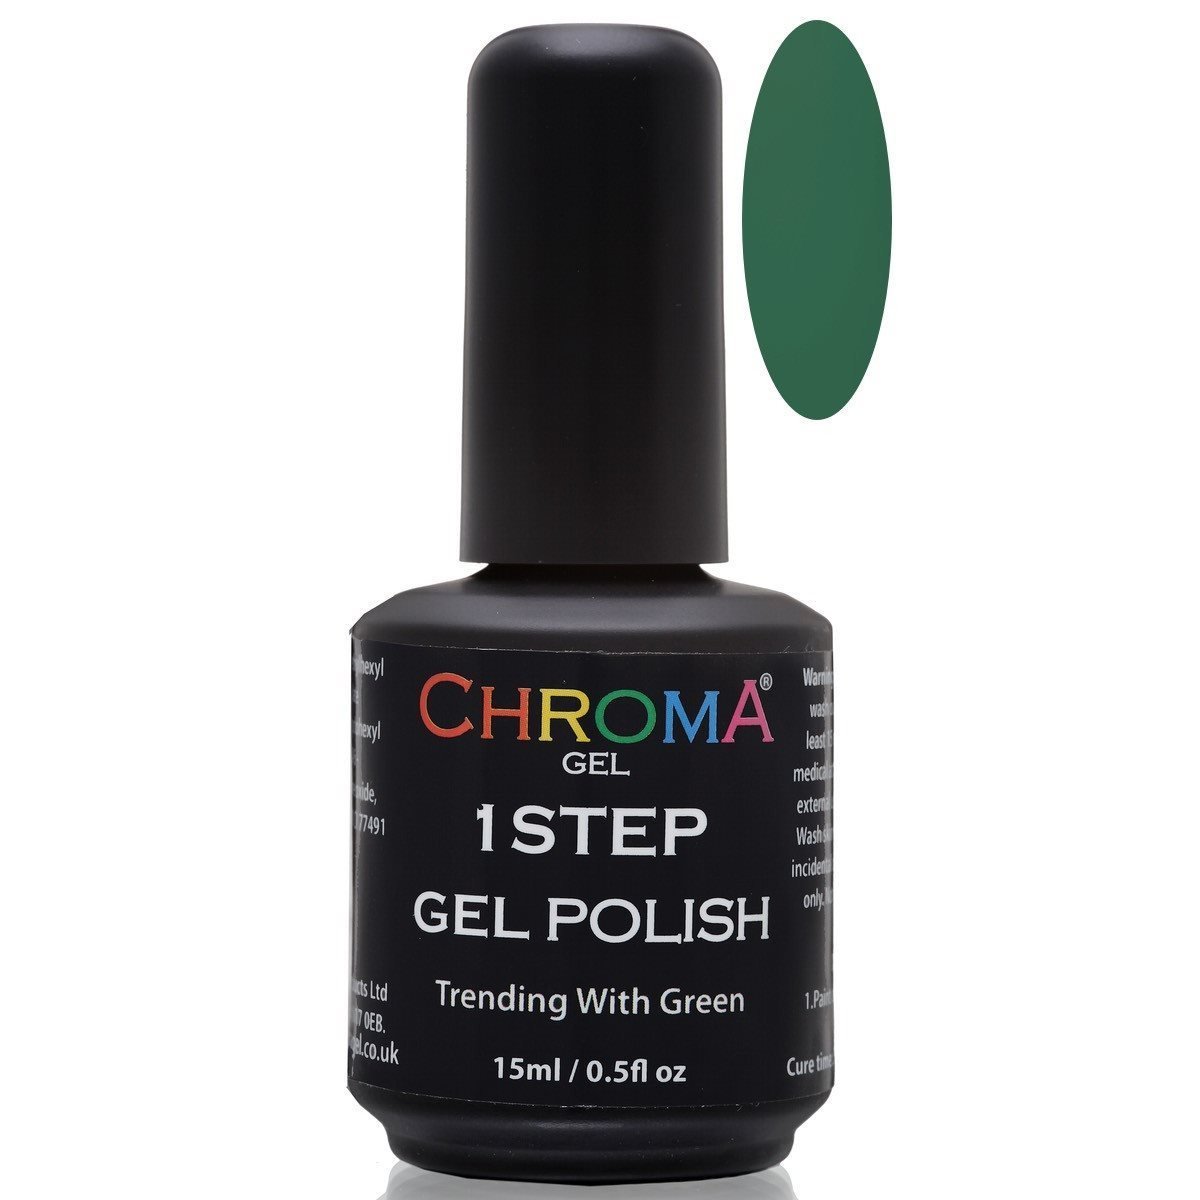 Chroma Gel 1 Step Gel Polish Trending With Green No.47 - beautyhair.co.ukChroma Gel